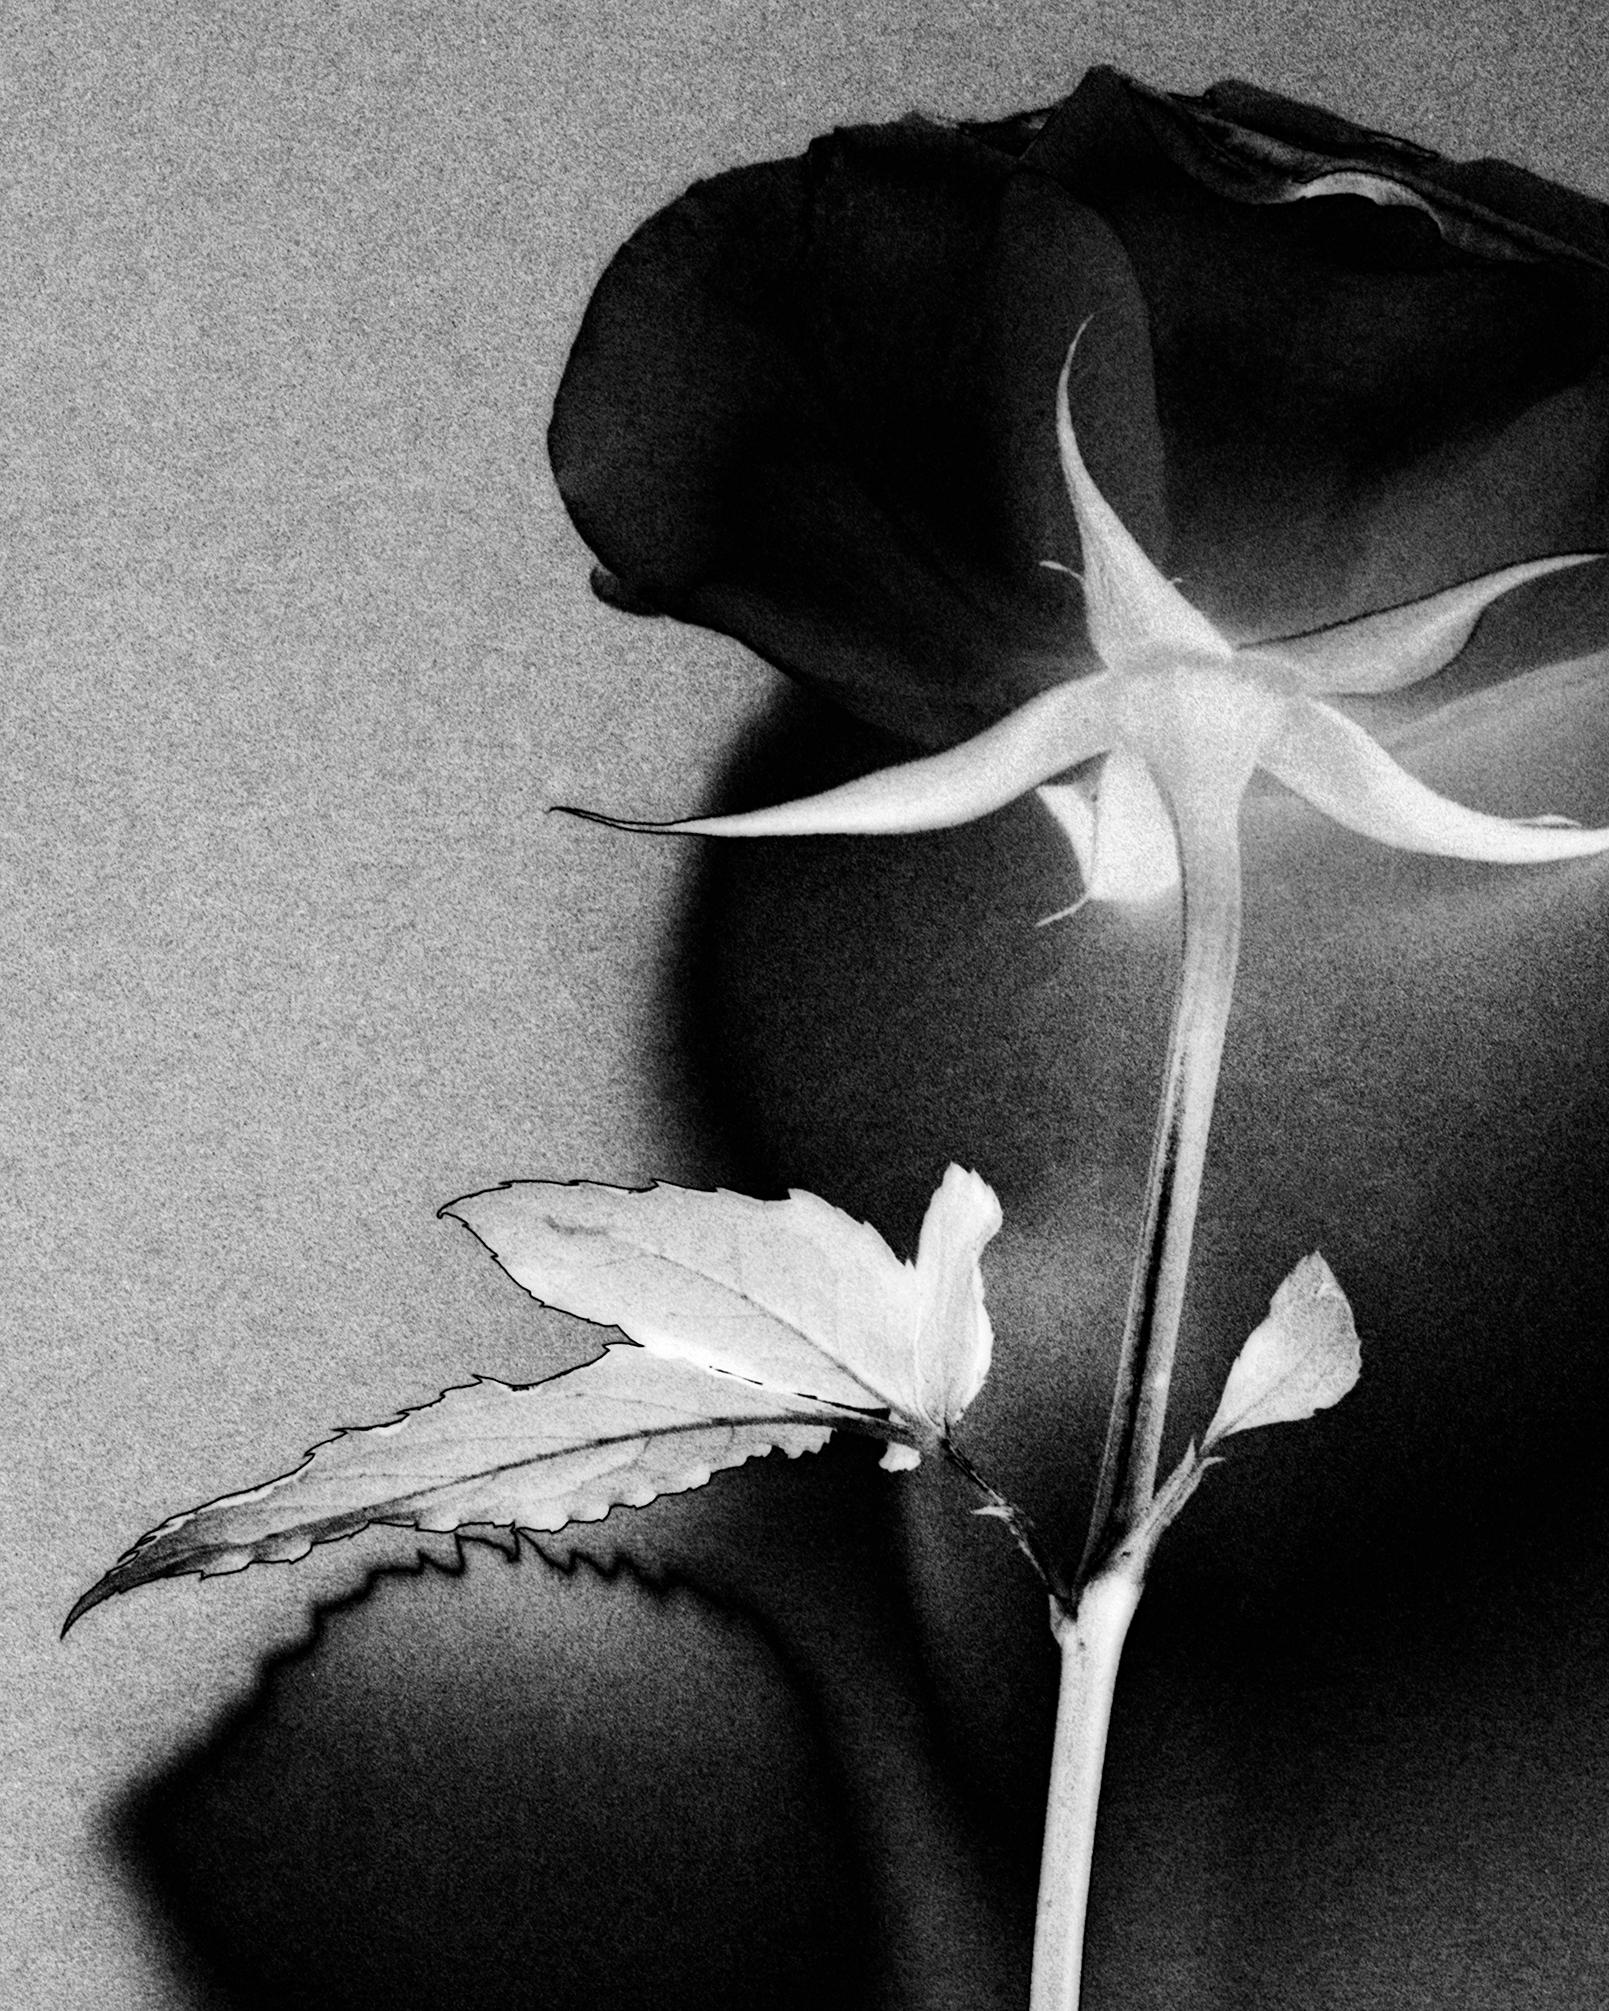 Black rose - analogue still-life photograph - Photograph by Ugne Pouwell